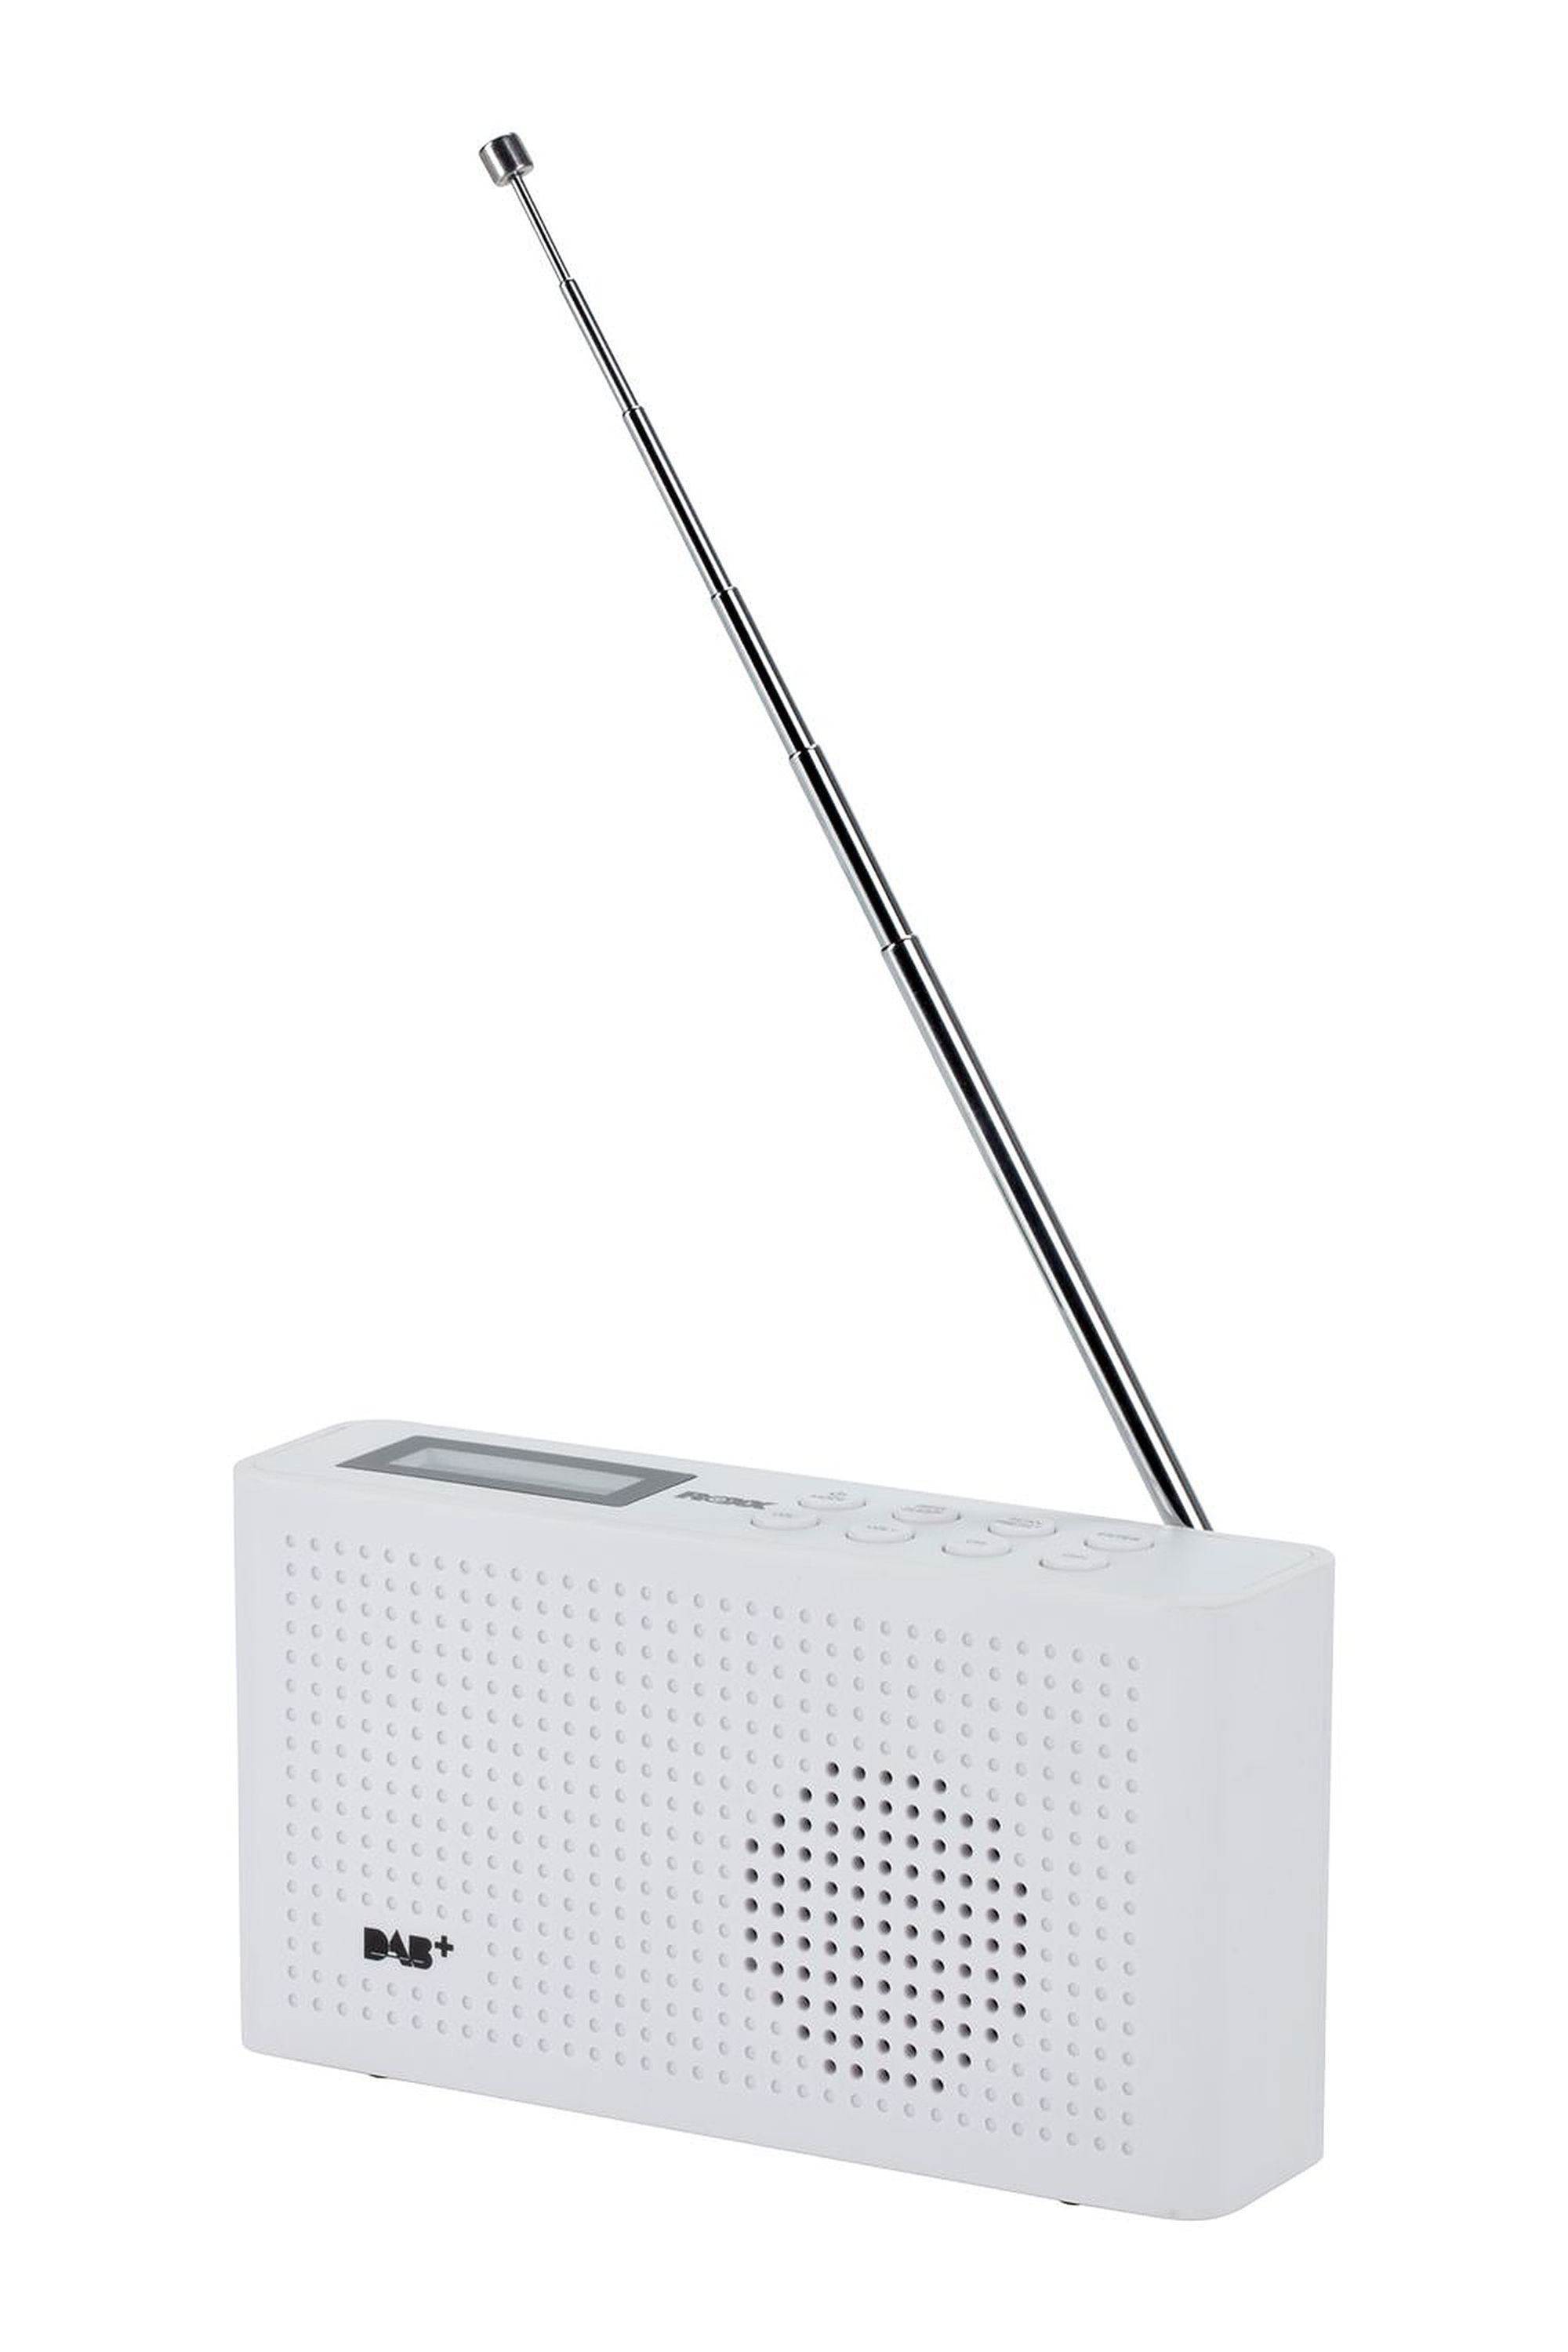 DAB/DAB digital Radio/UKW Radio tragbar mit eingebautem Akku ROXX DAB 201 weiss 